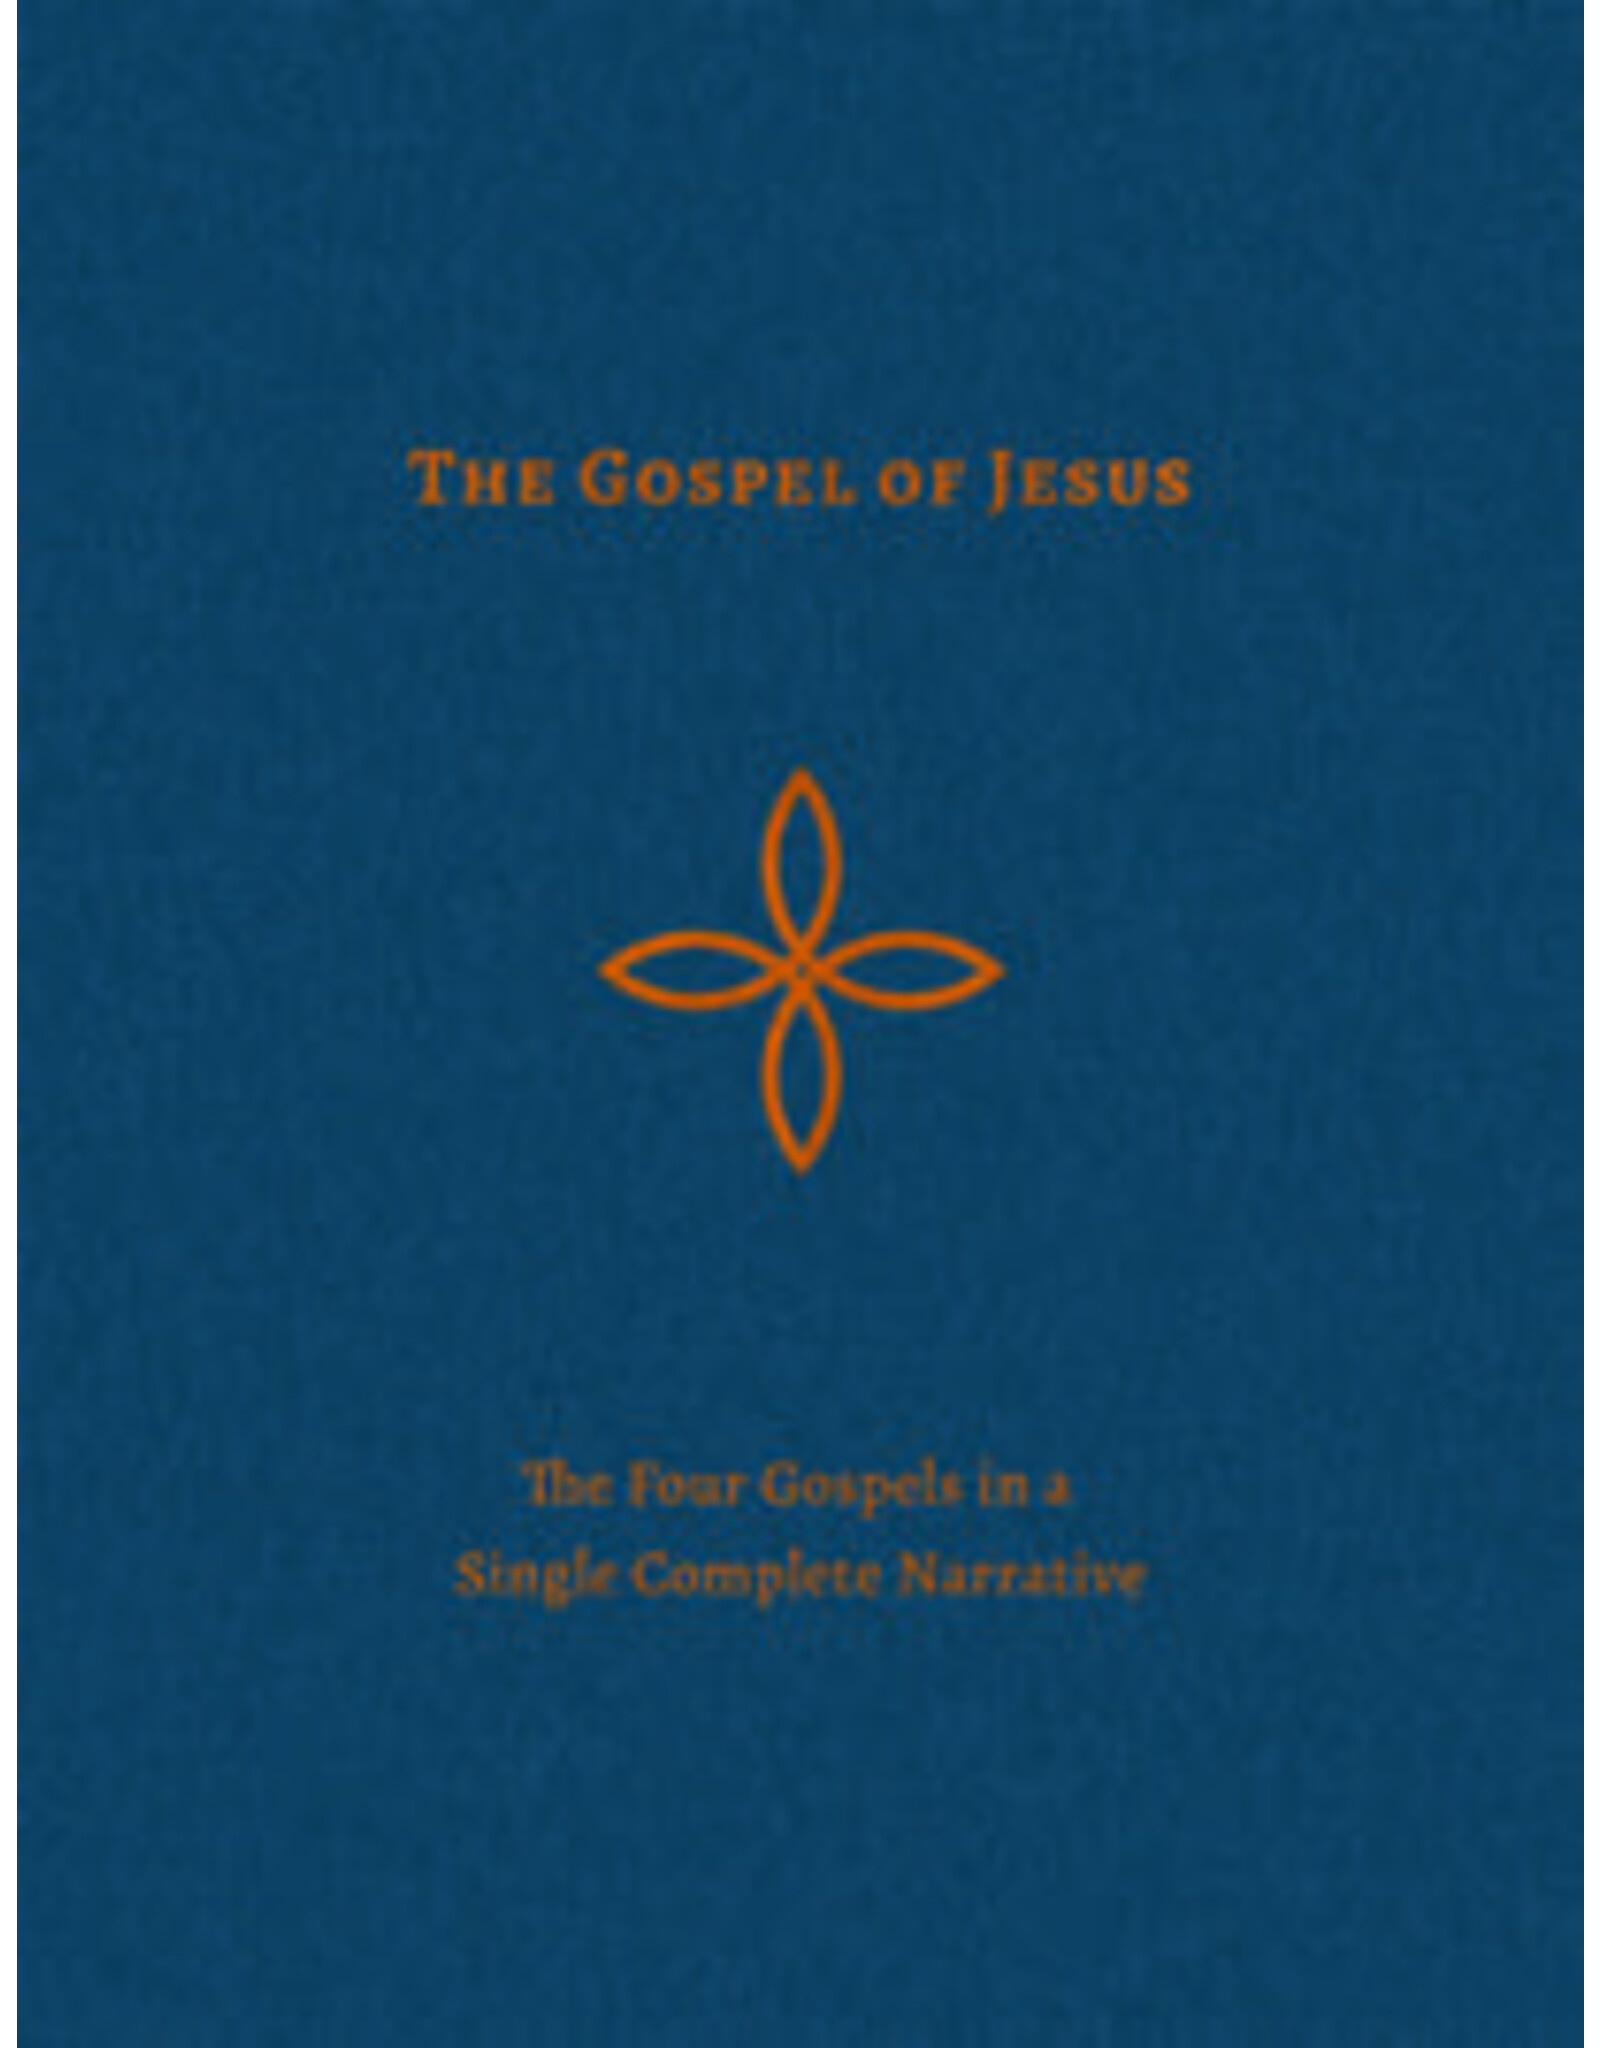 Loraine Boettner The Gospel of Jesus - Four Gospels in Single Narrative